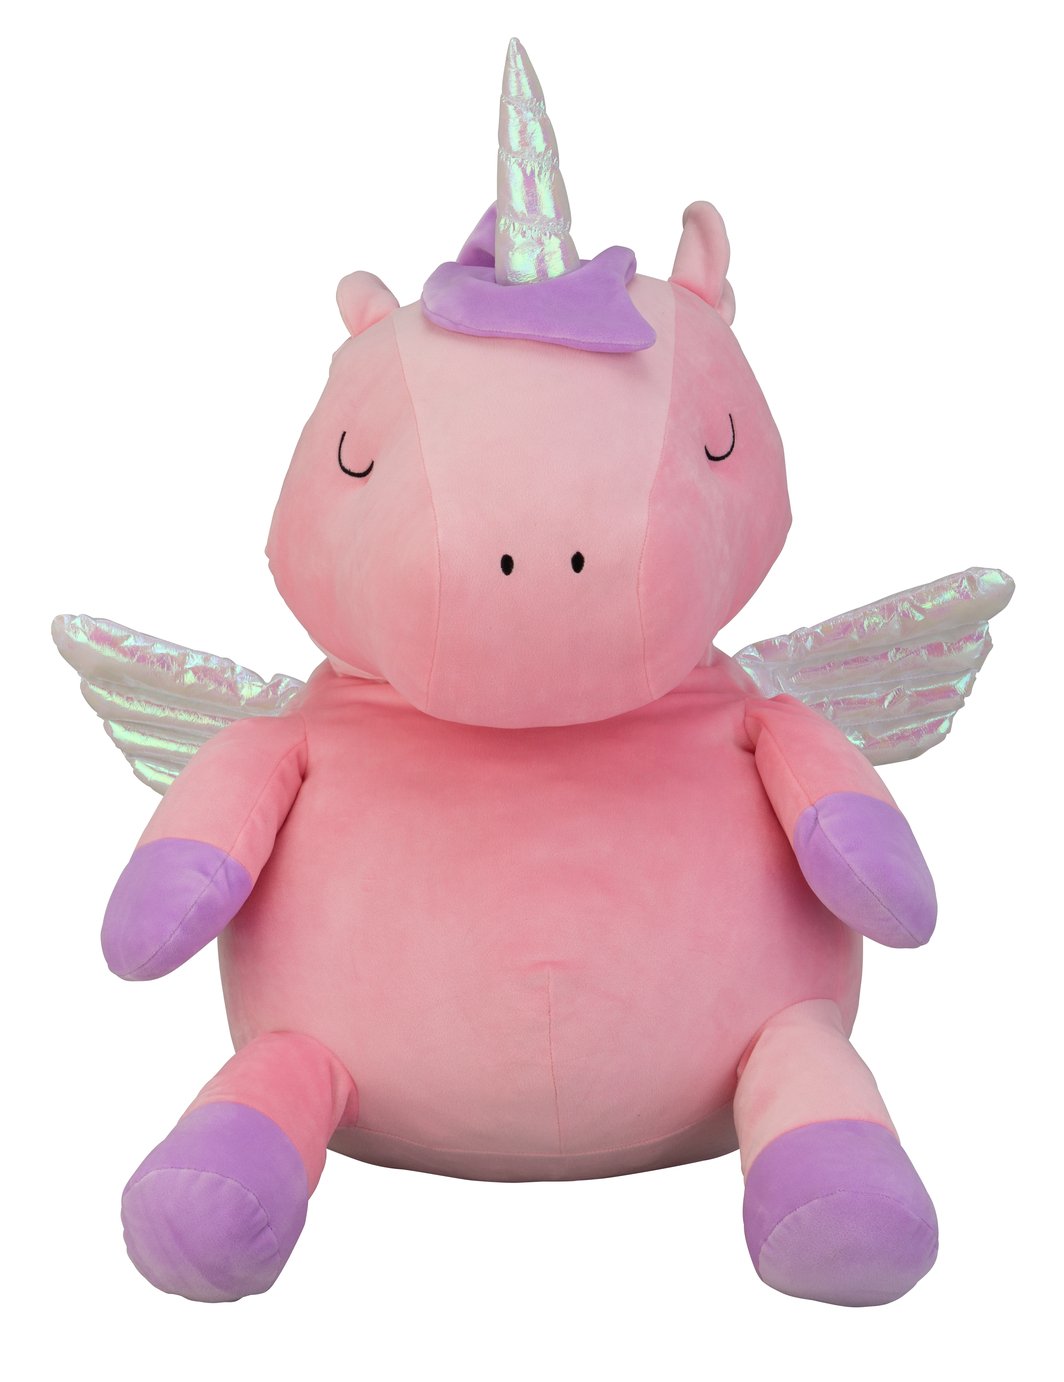 Squishy 22inch Unicorn Soft Toy Review